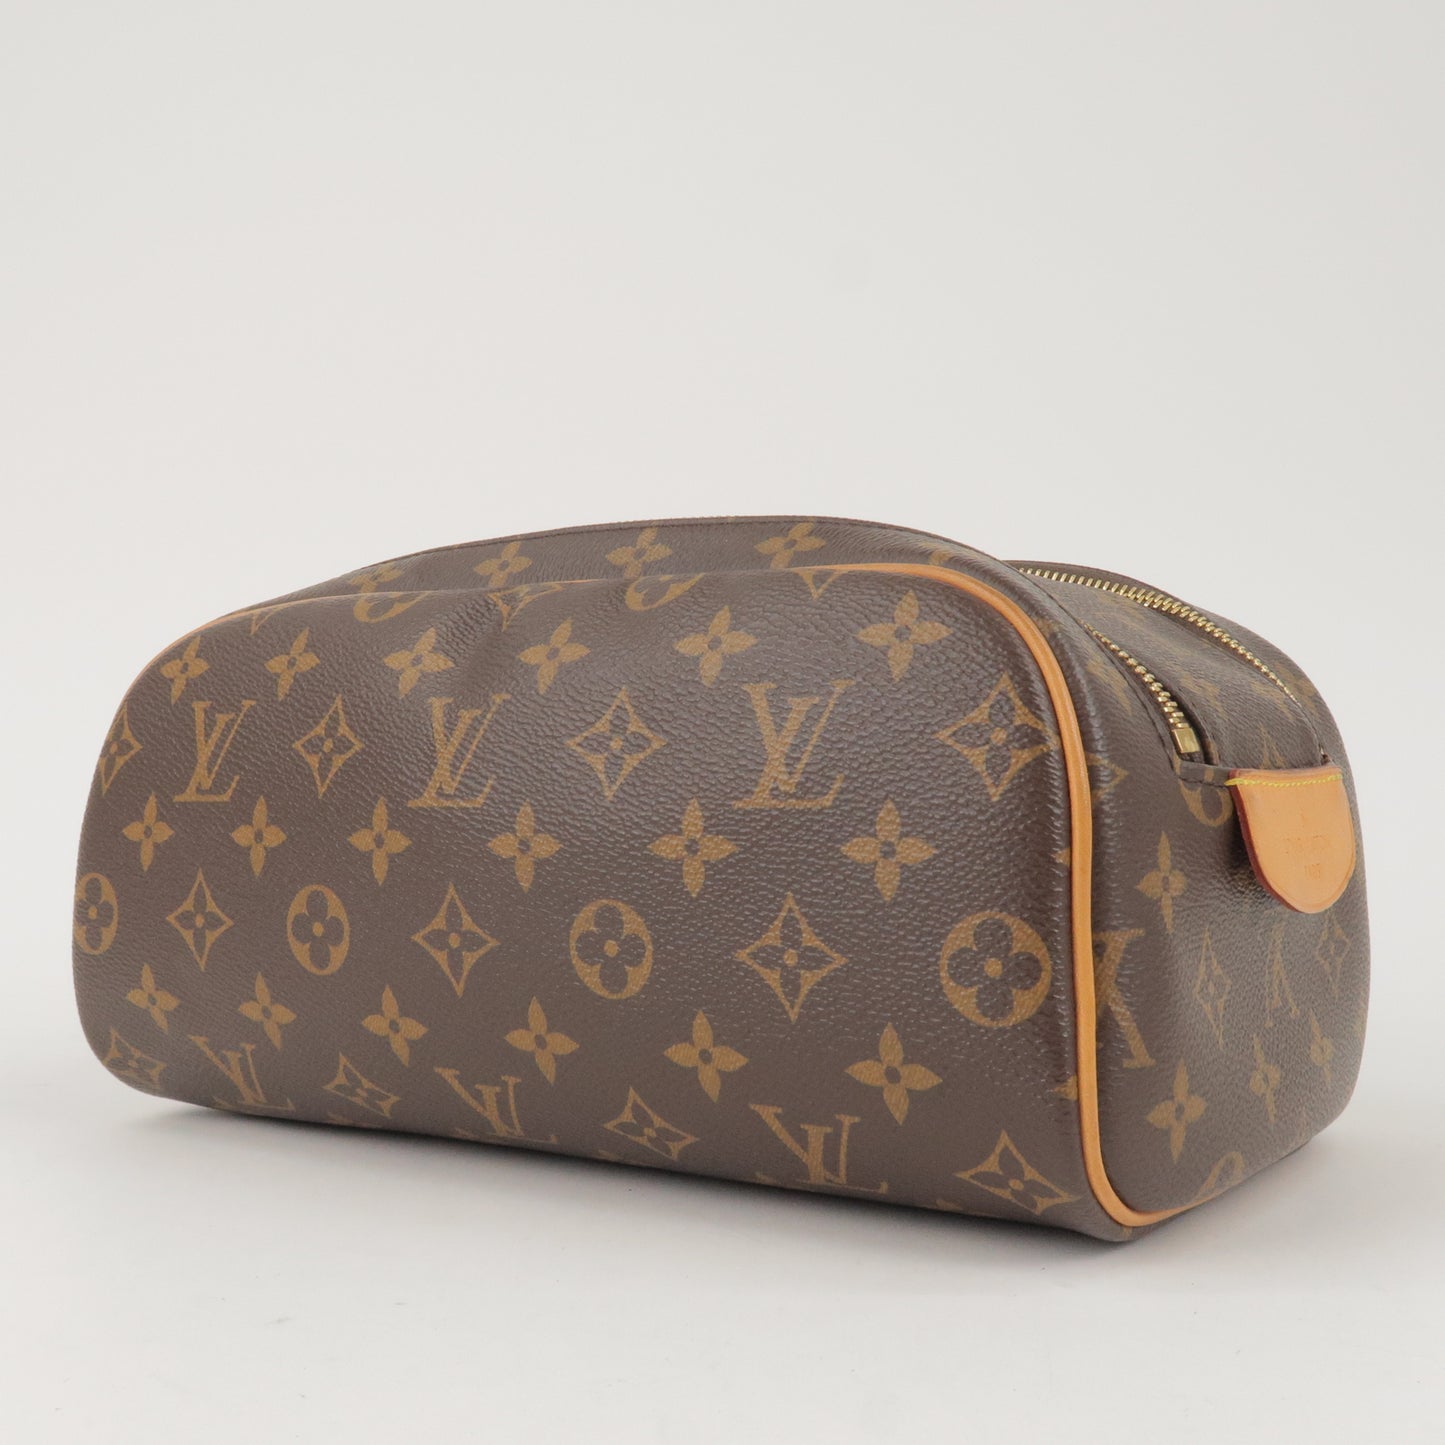 Shop Louis Vuitton MONOGRAM Dopp kit toilet pouch (M44494) by Leeway